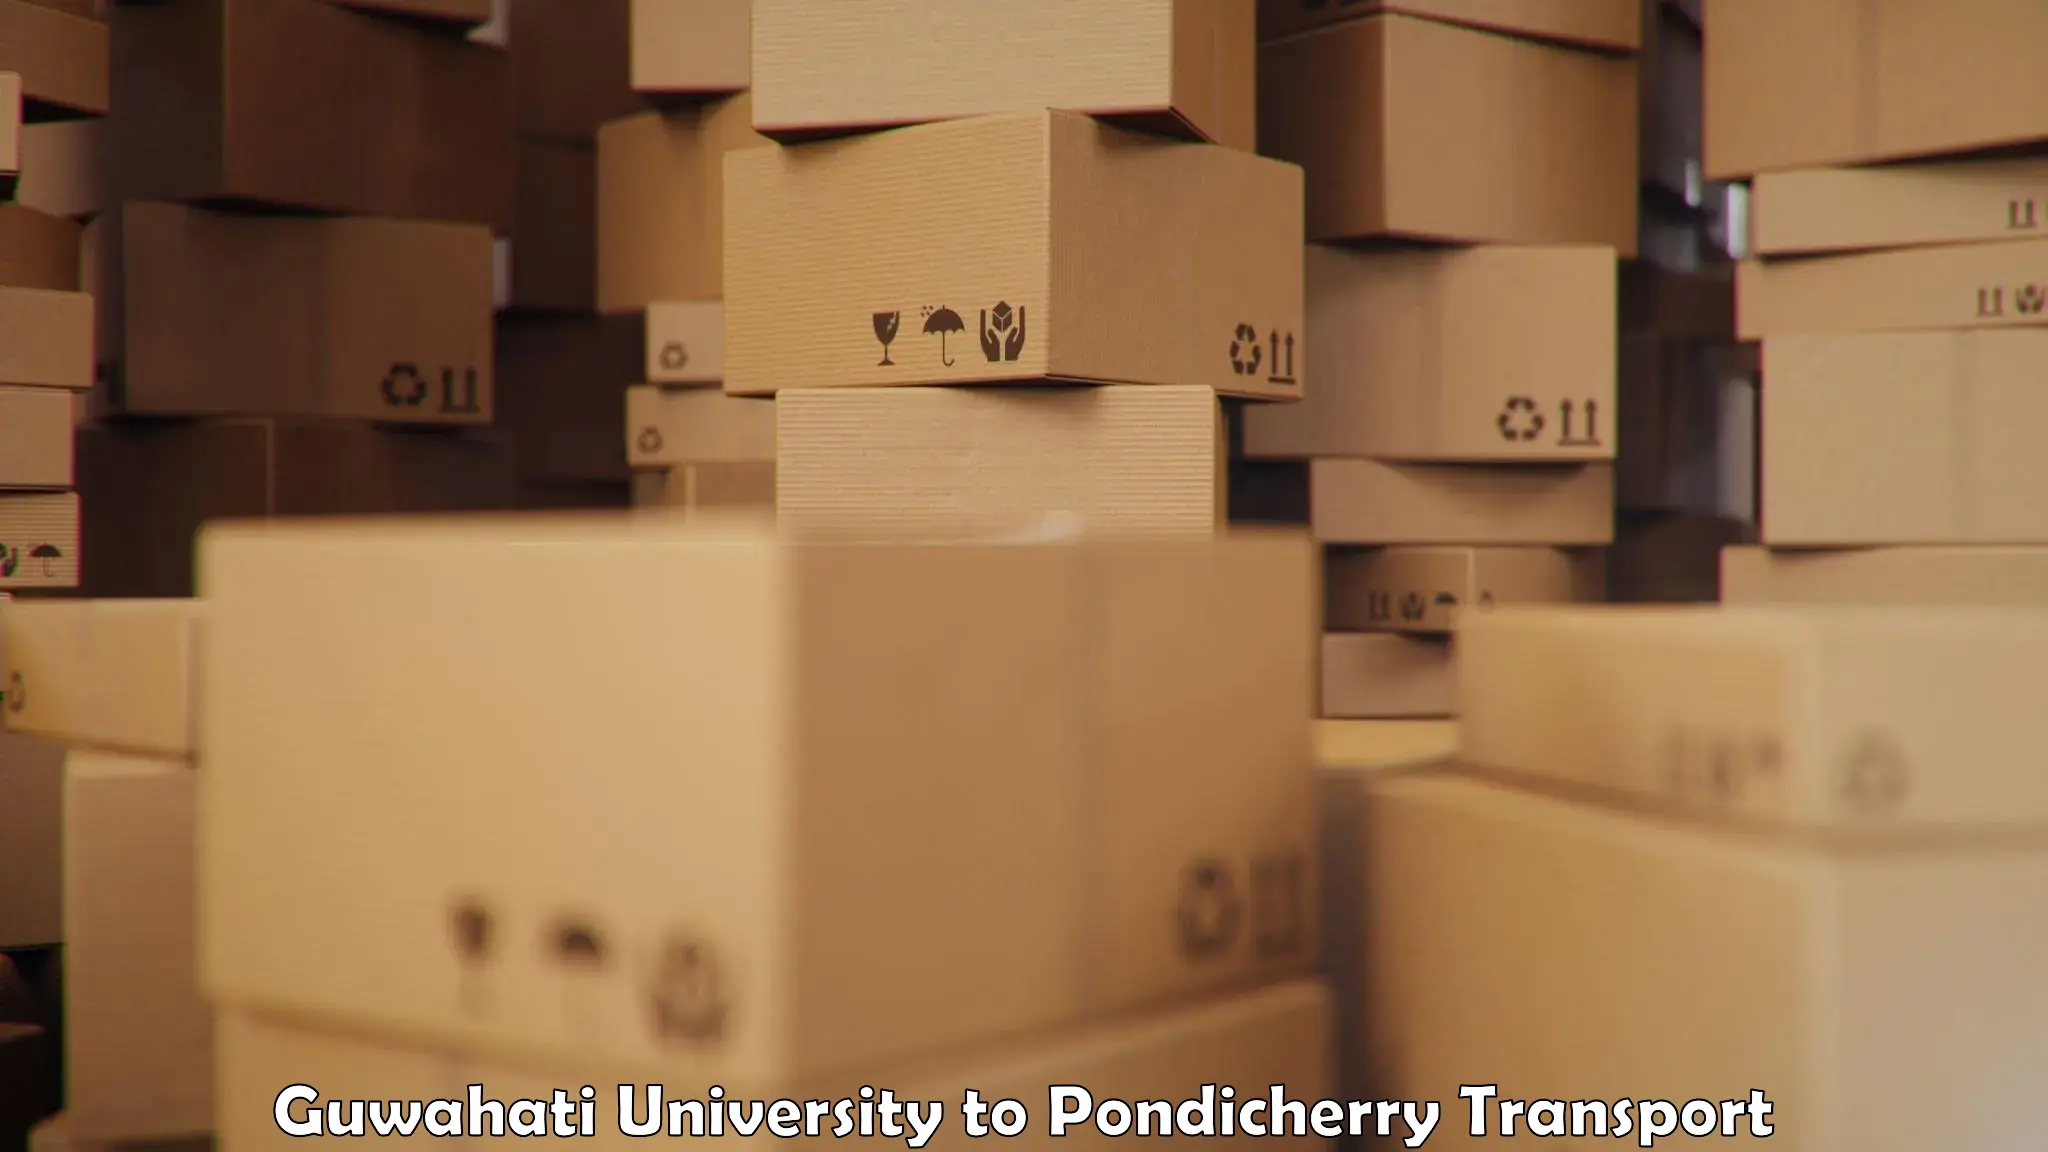 Domestic goods transportation services Guwahati University to Pondicherry